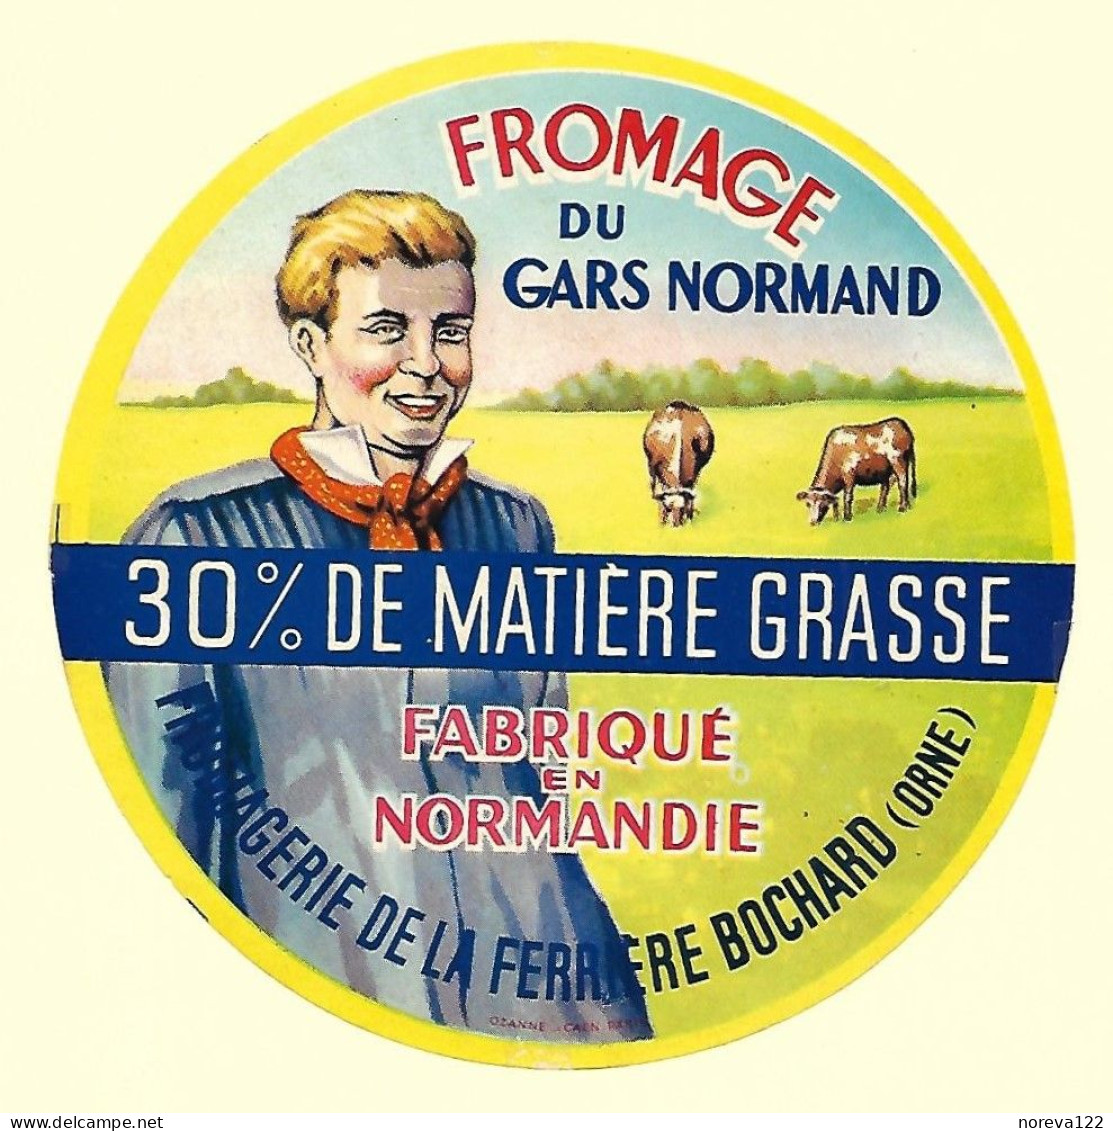 ETIQU.FROM. DU GARS NORMAND LaLa Ferrière Bochard Orne - Cheese